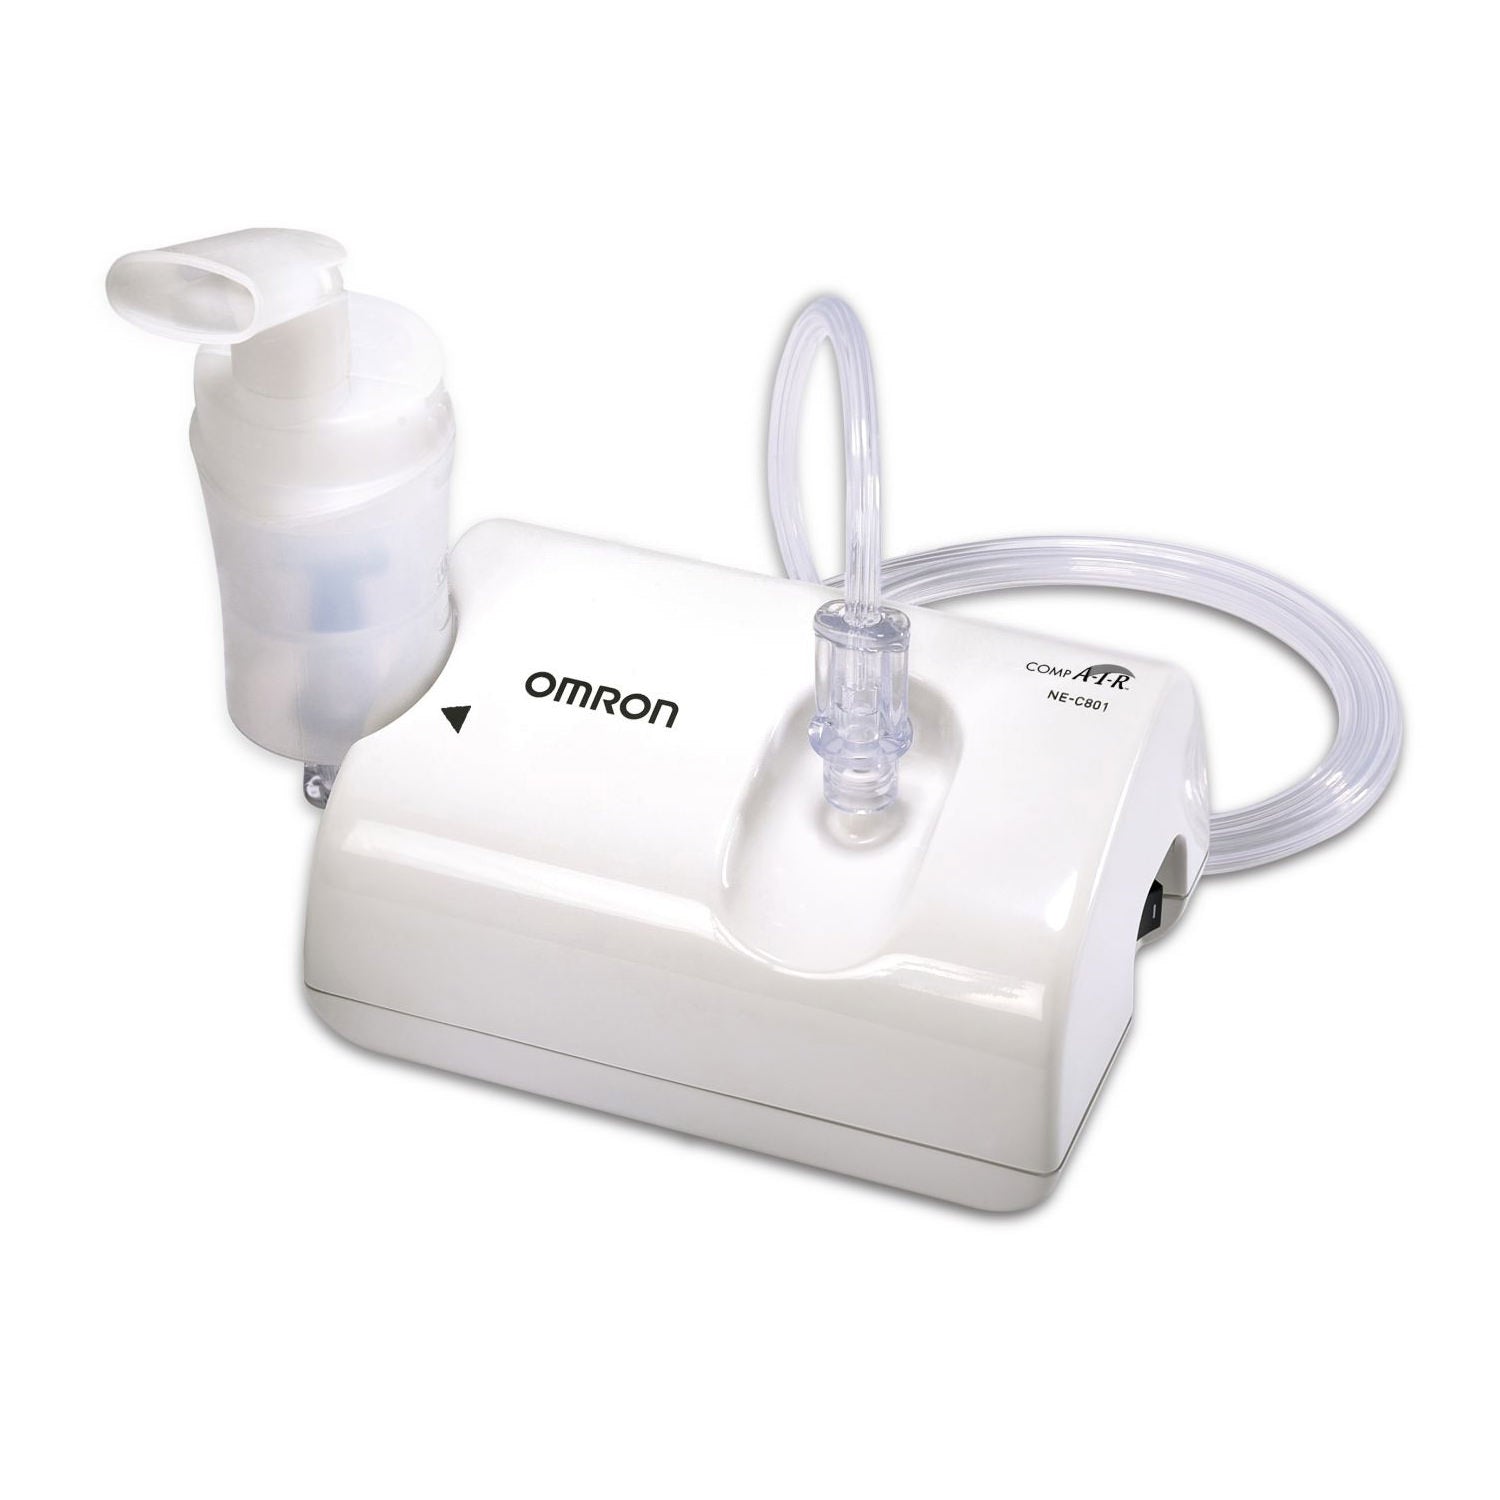 Omron CompAir Nebulizer System NE-C801 - Just Nebulizers